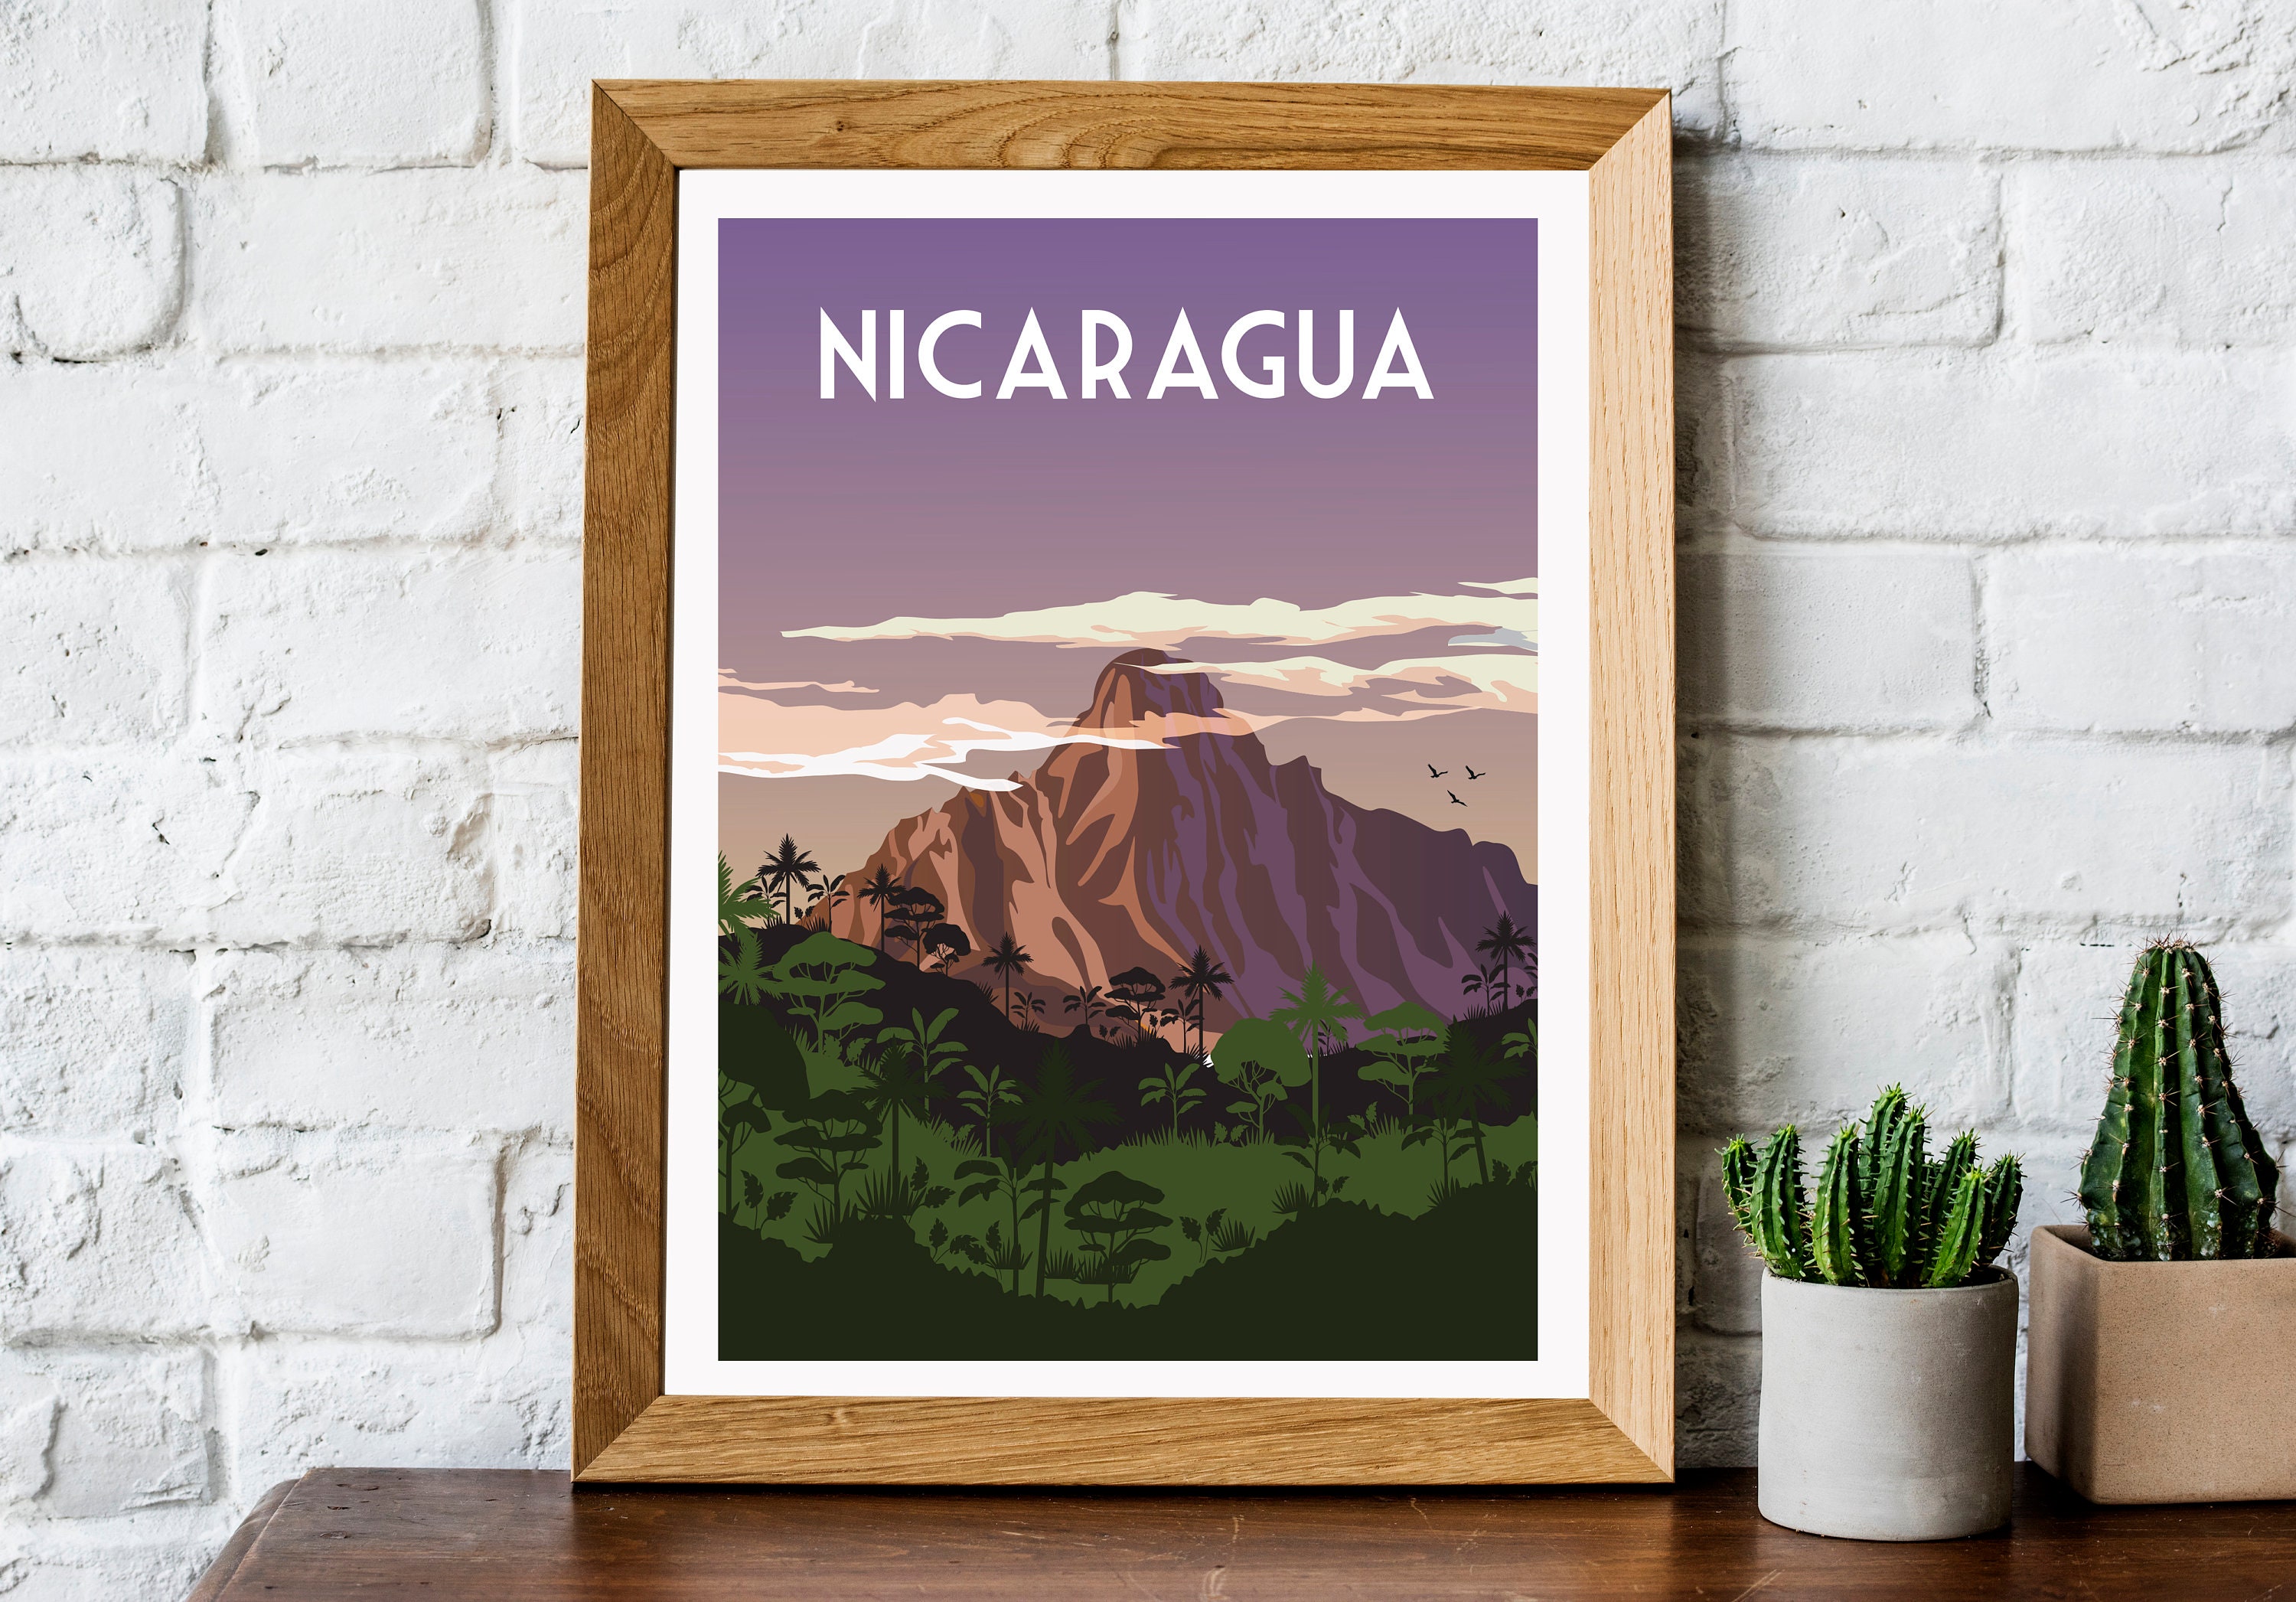 Buy Bogota 1938 Vintage Travel Poste Managua Nicaragua X Serie